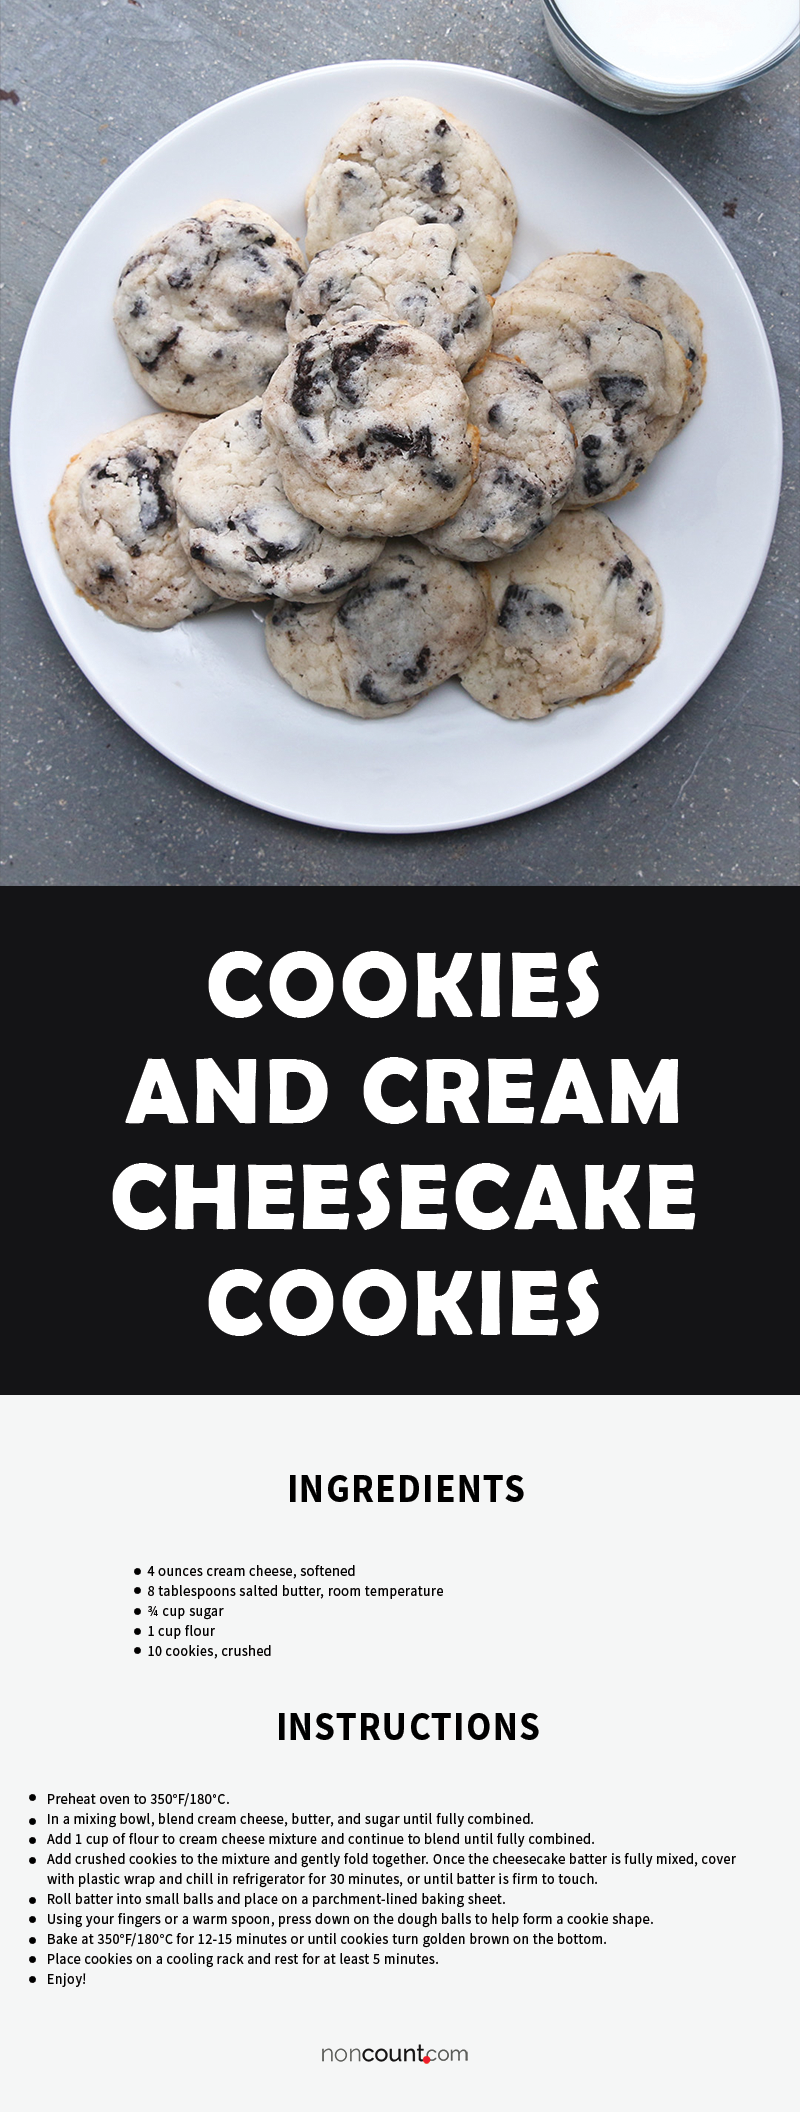  Cookies And Cream Cheesecake Cookies Recipe Image